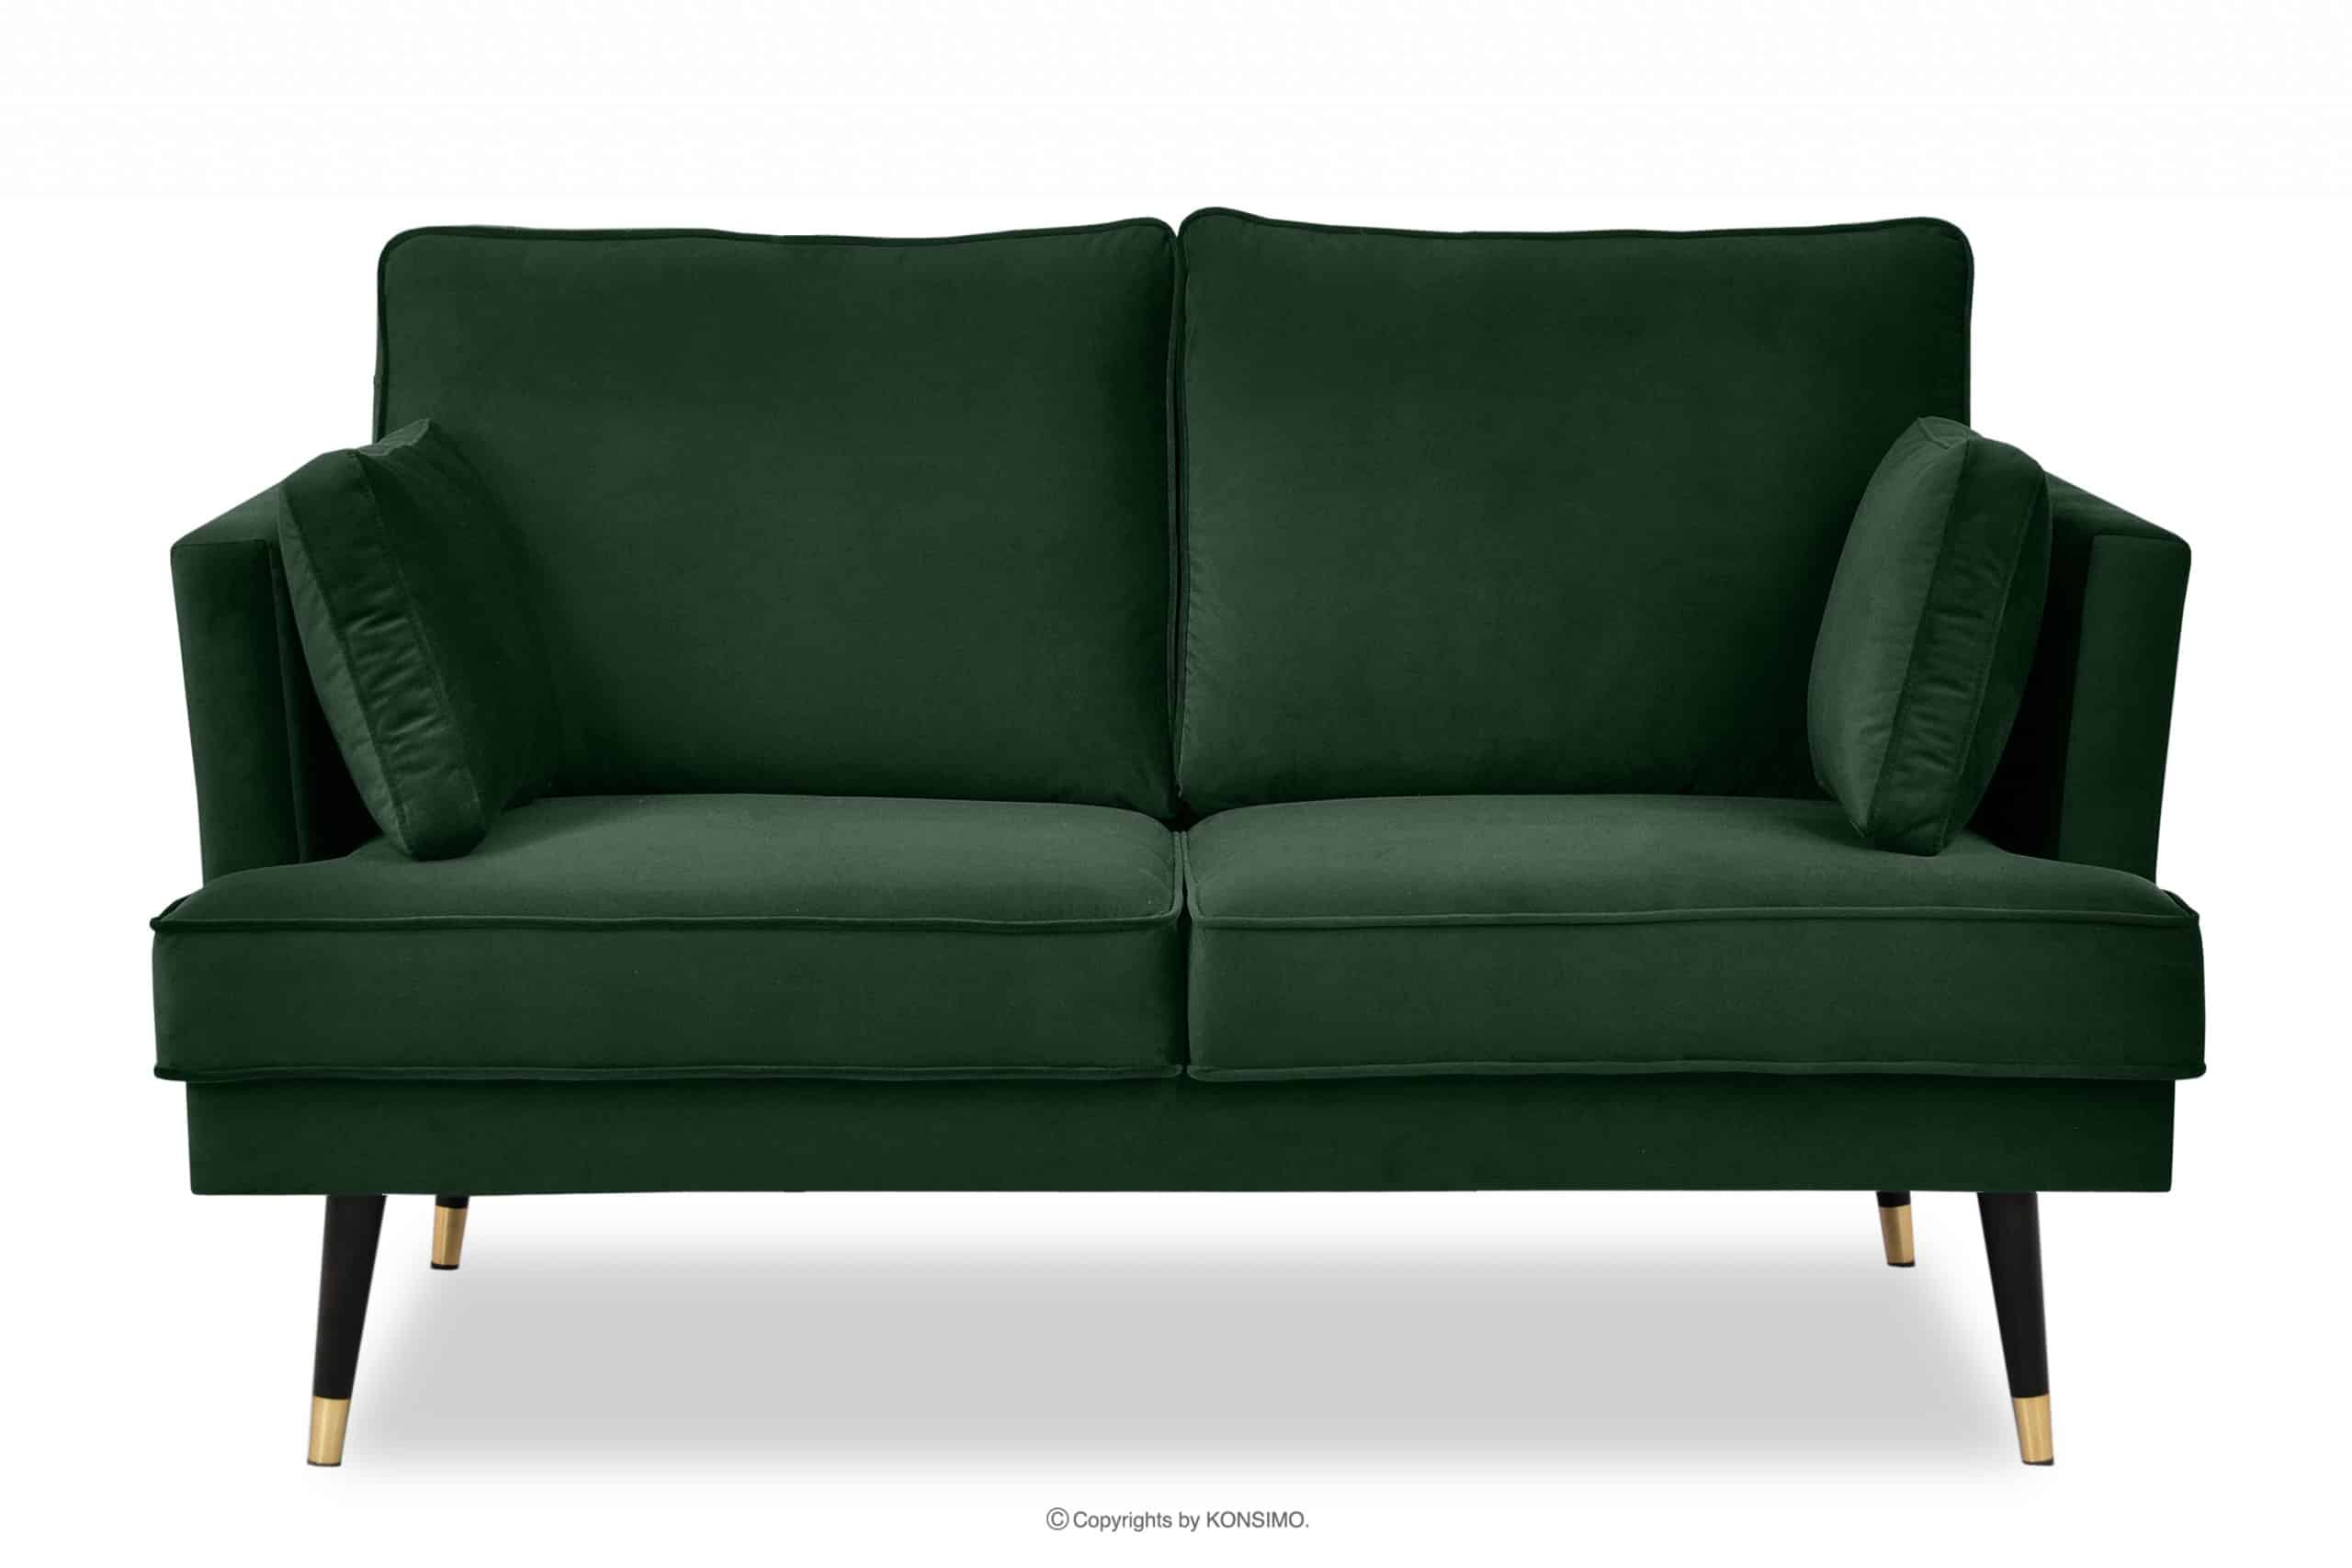 Sofa dwuosobowa welurowa glamour butelkowa zieleń